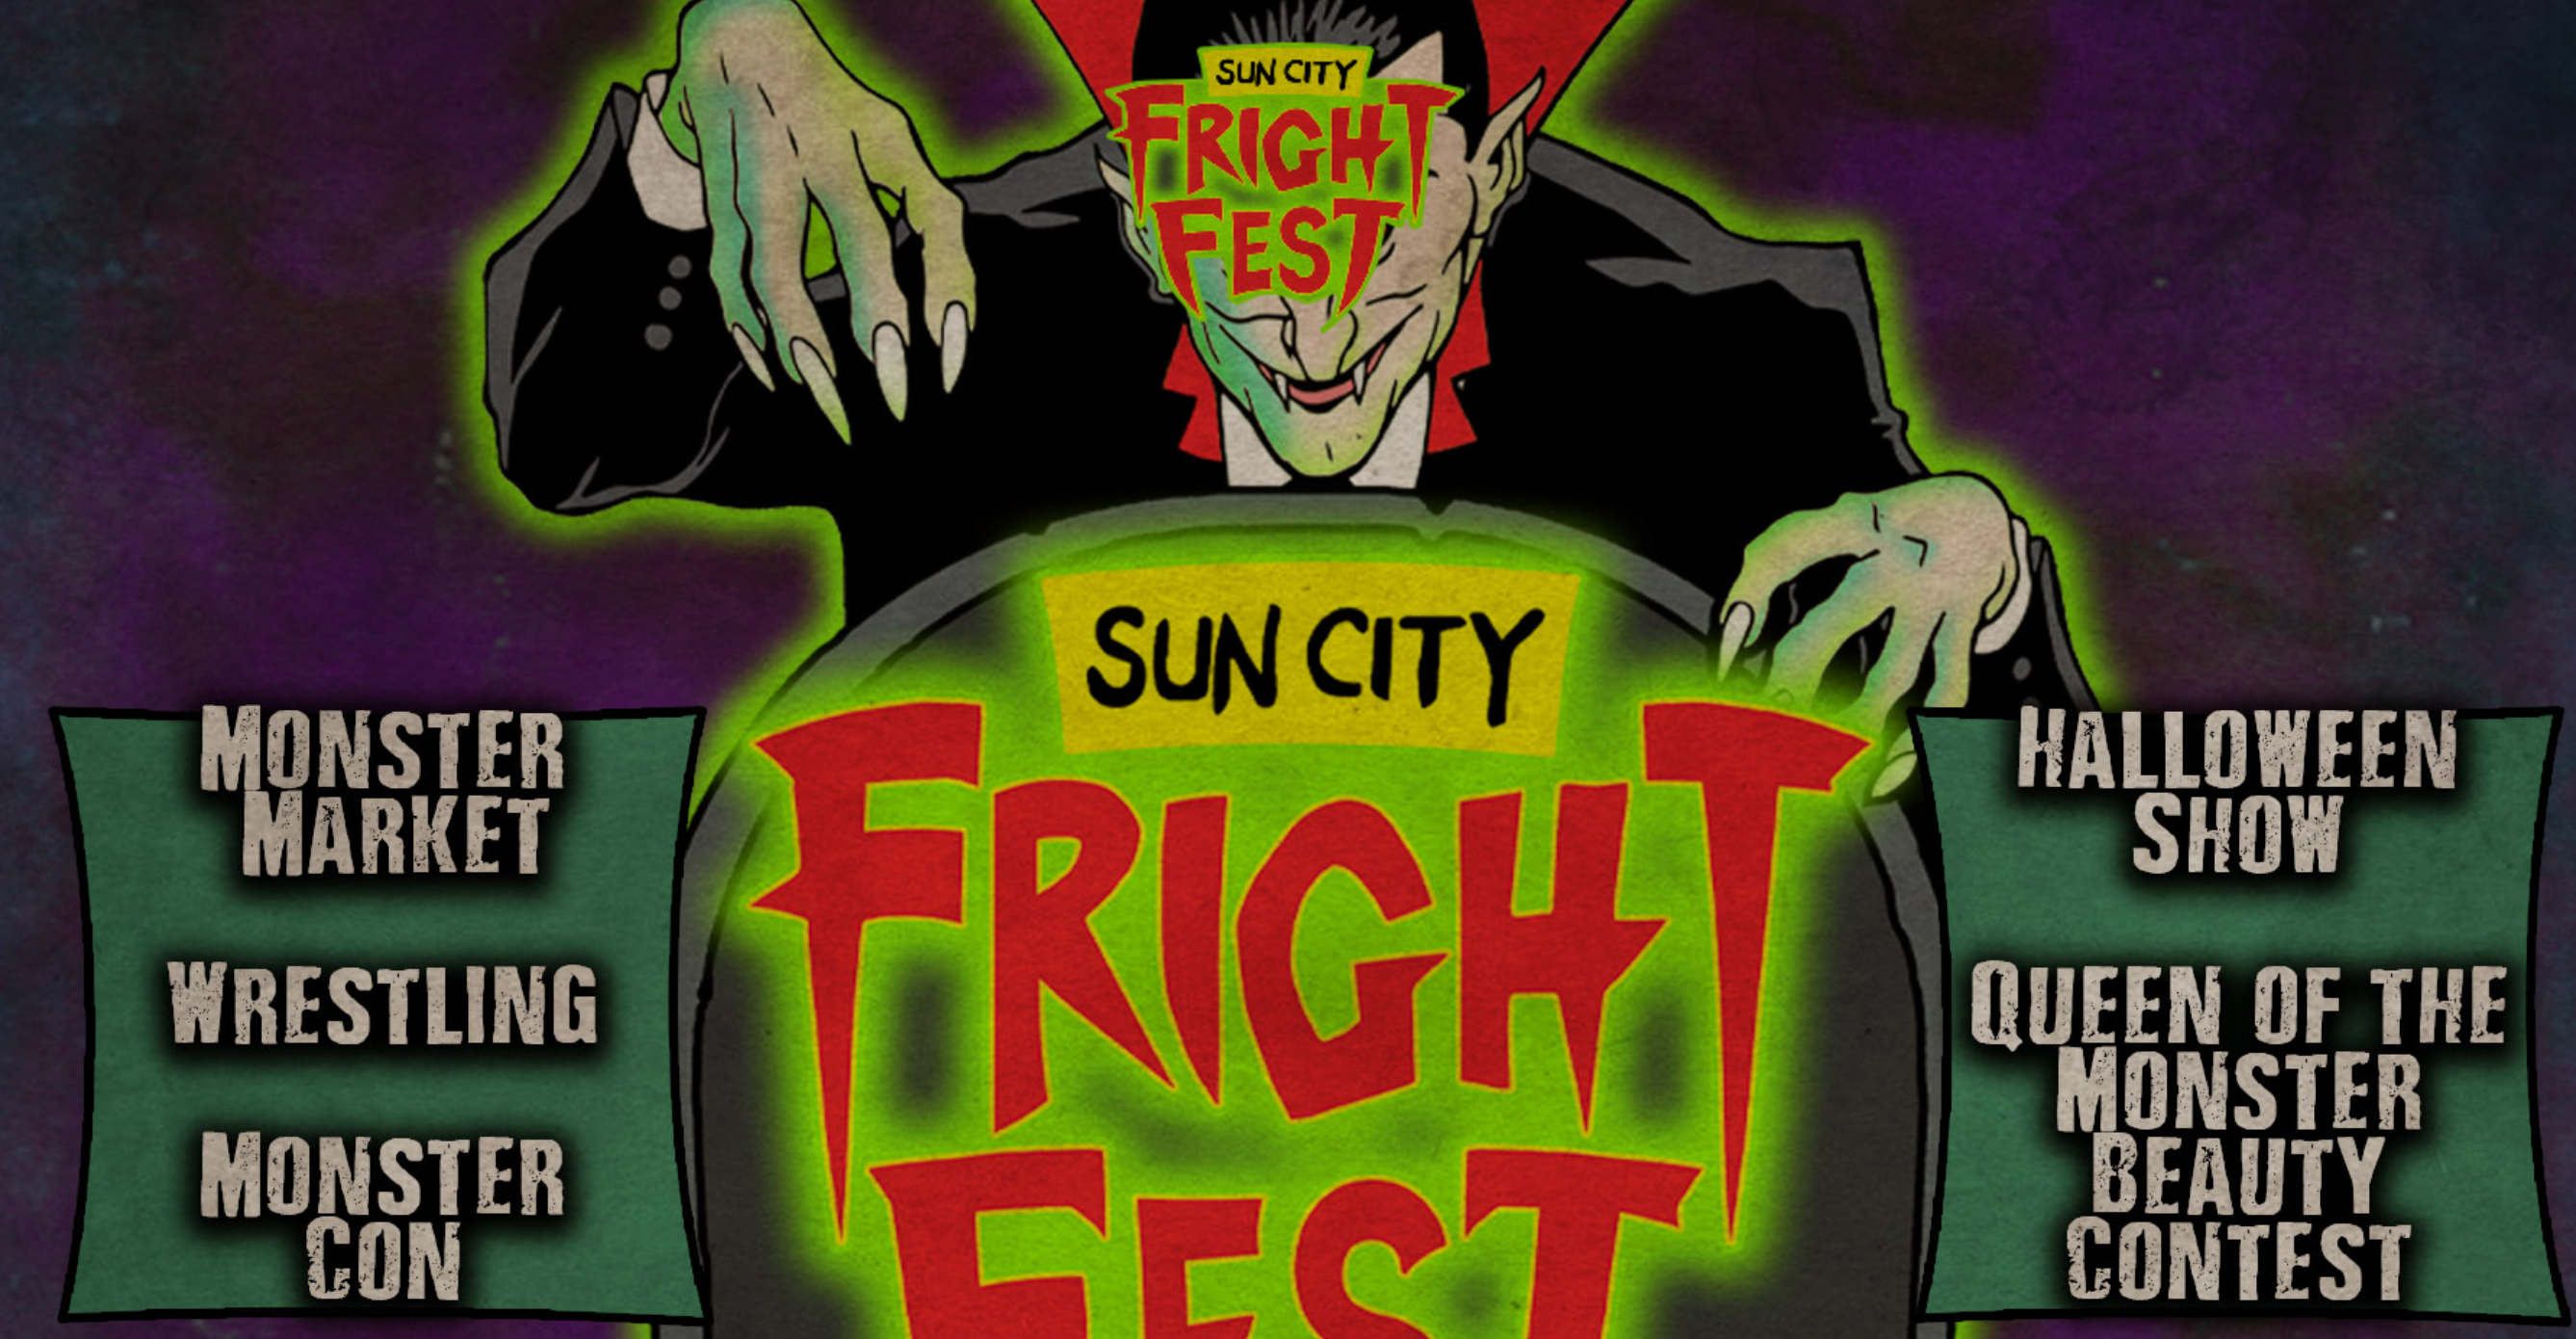 sun city fright fest